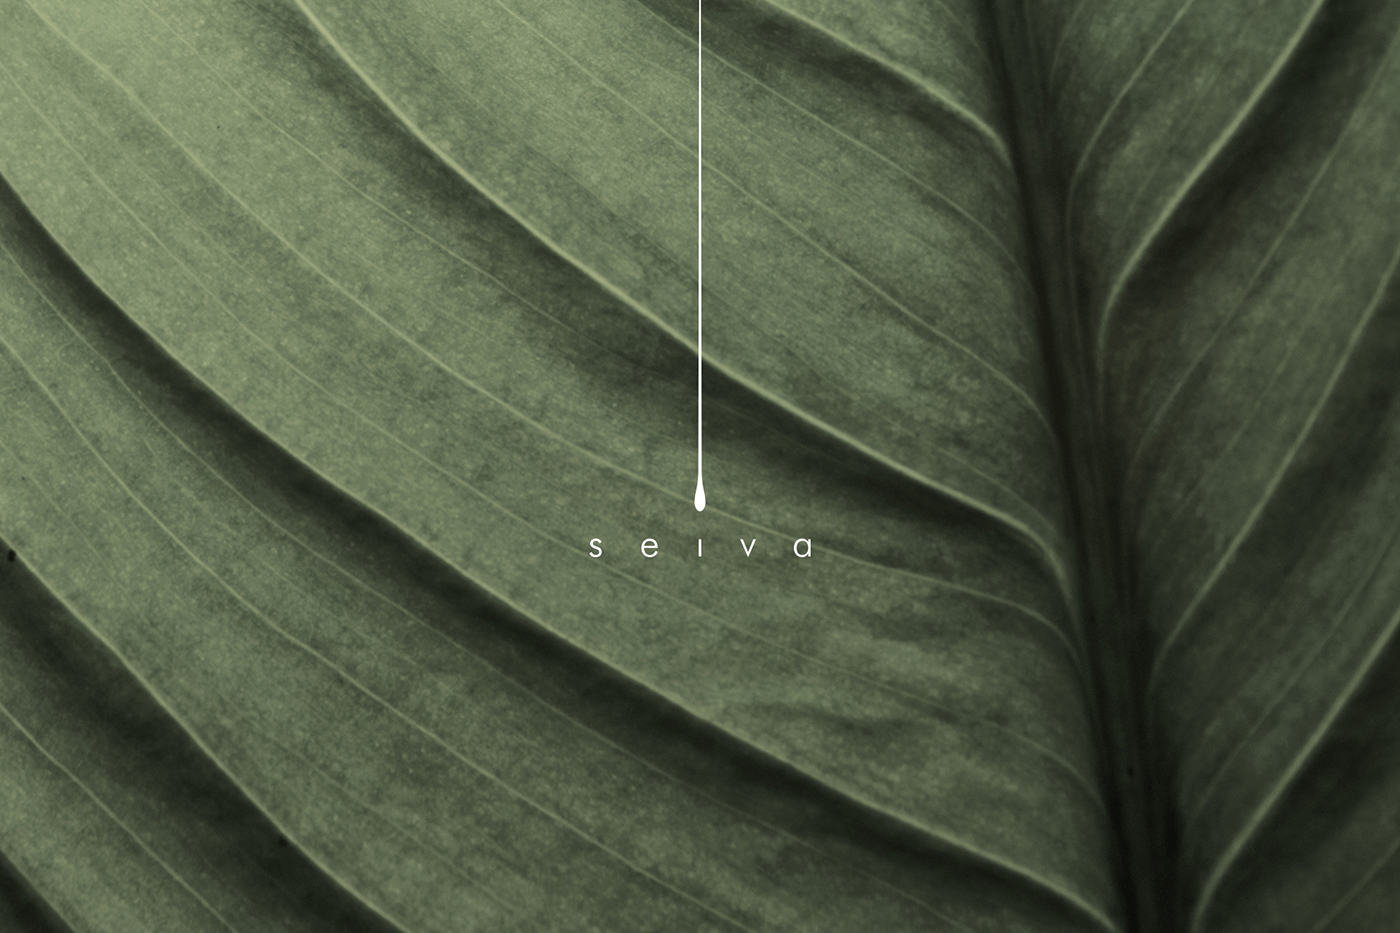 Seiva Nature brand clothes